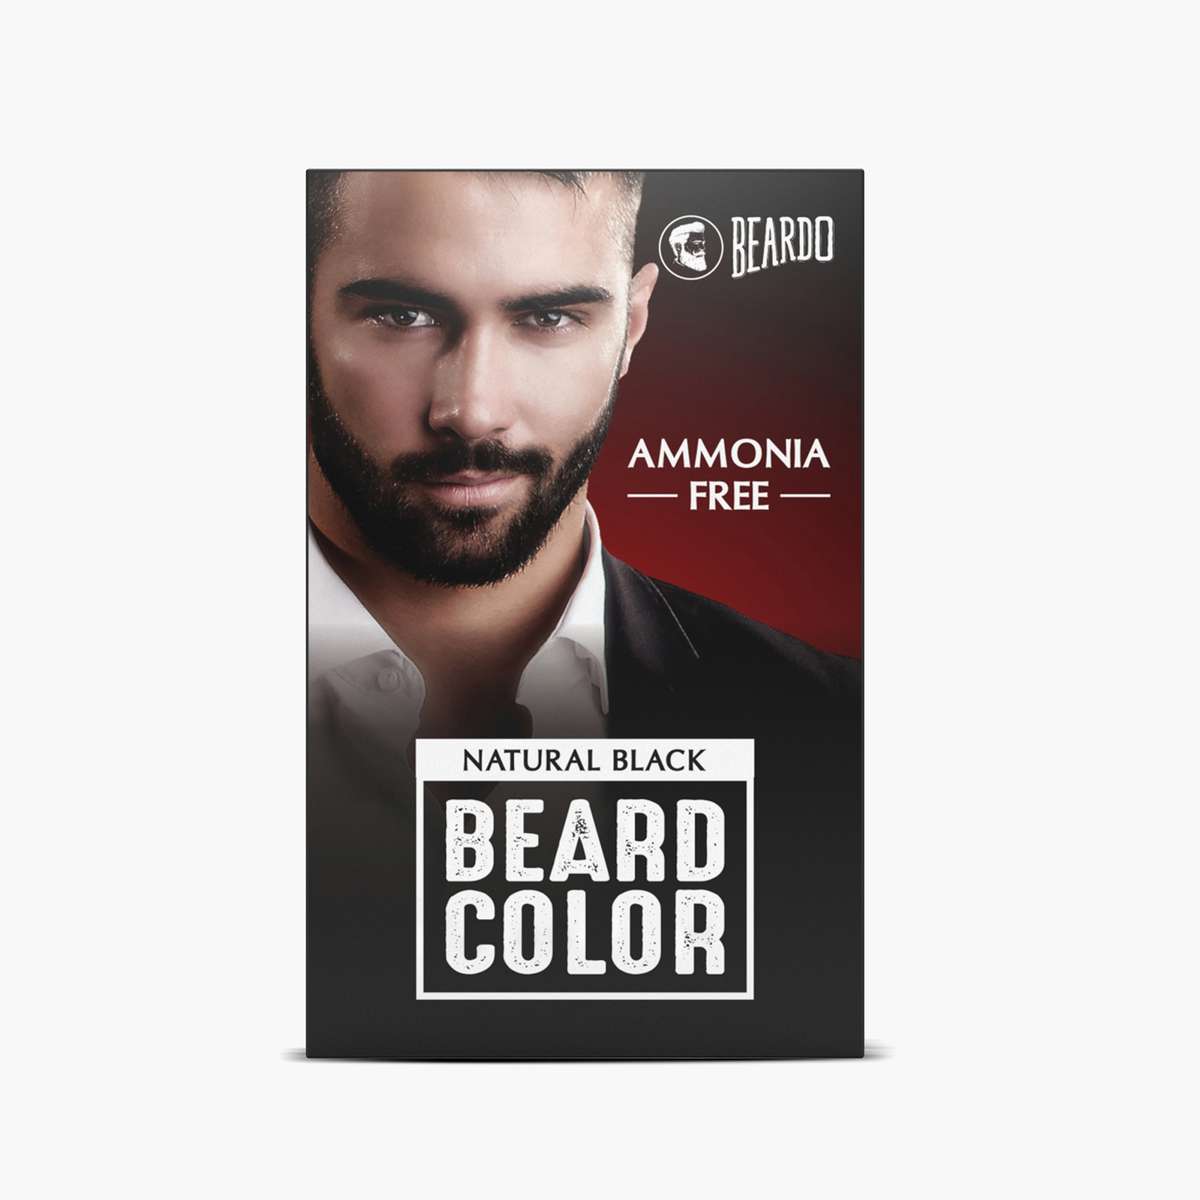 7.BEARDO Beard Color For Men - Natural Black